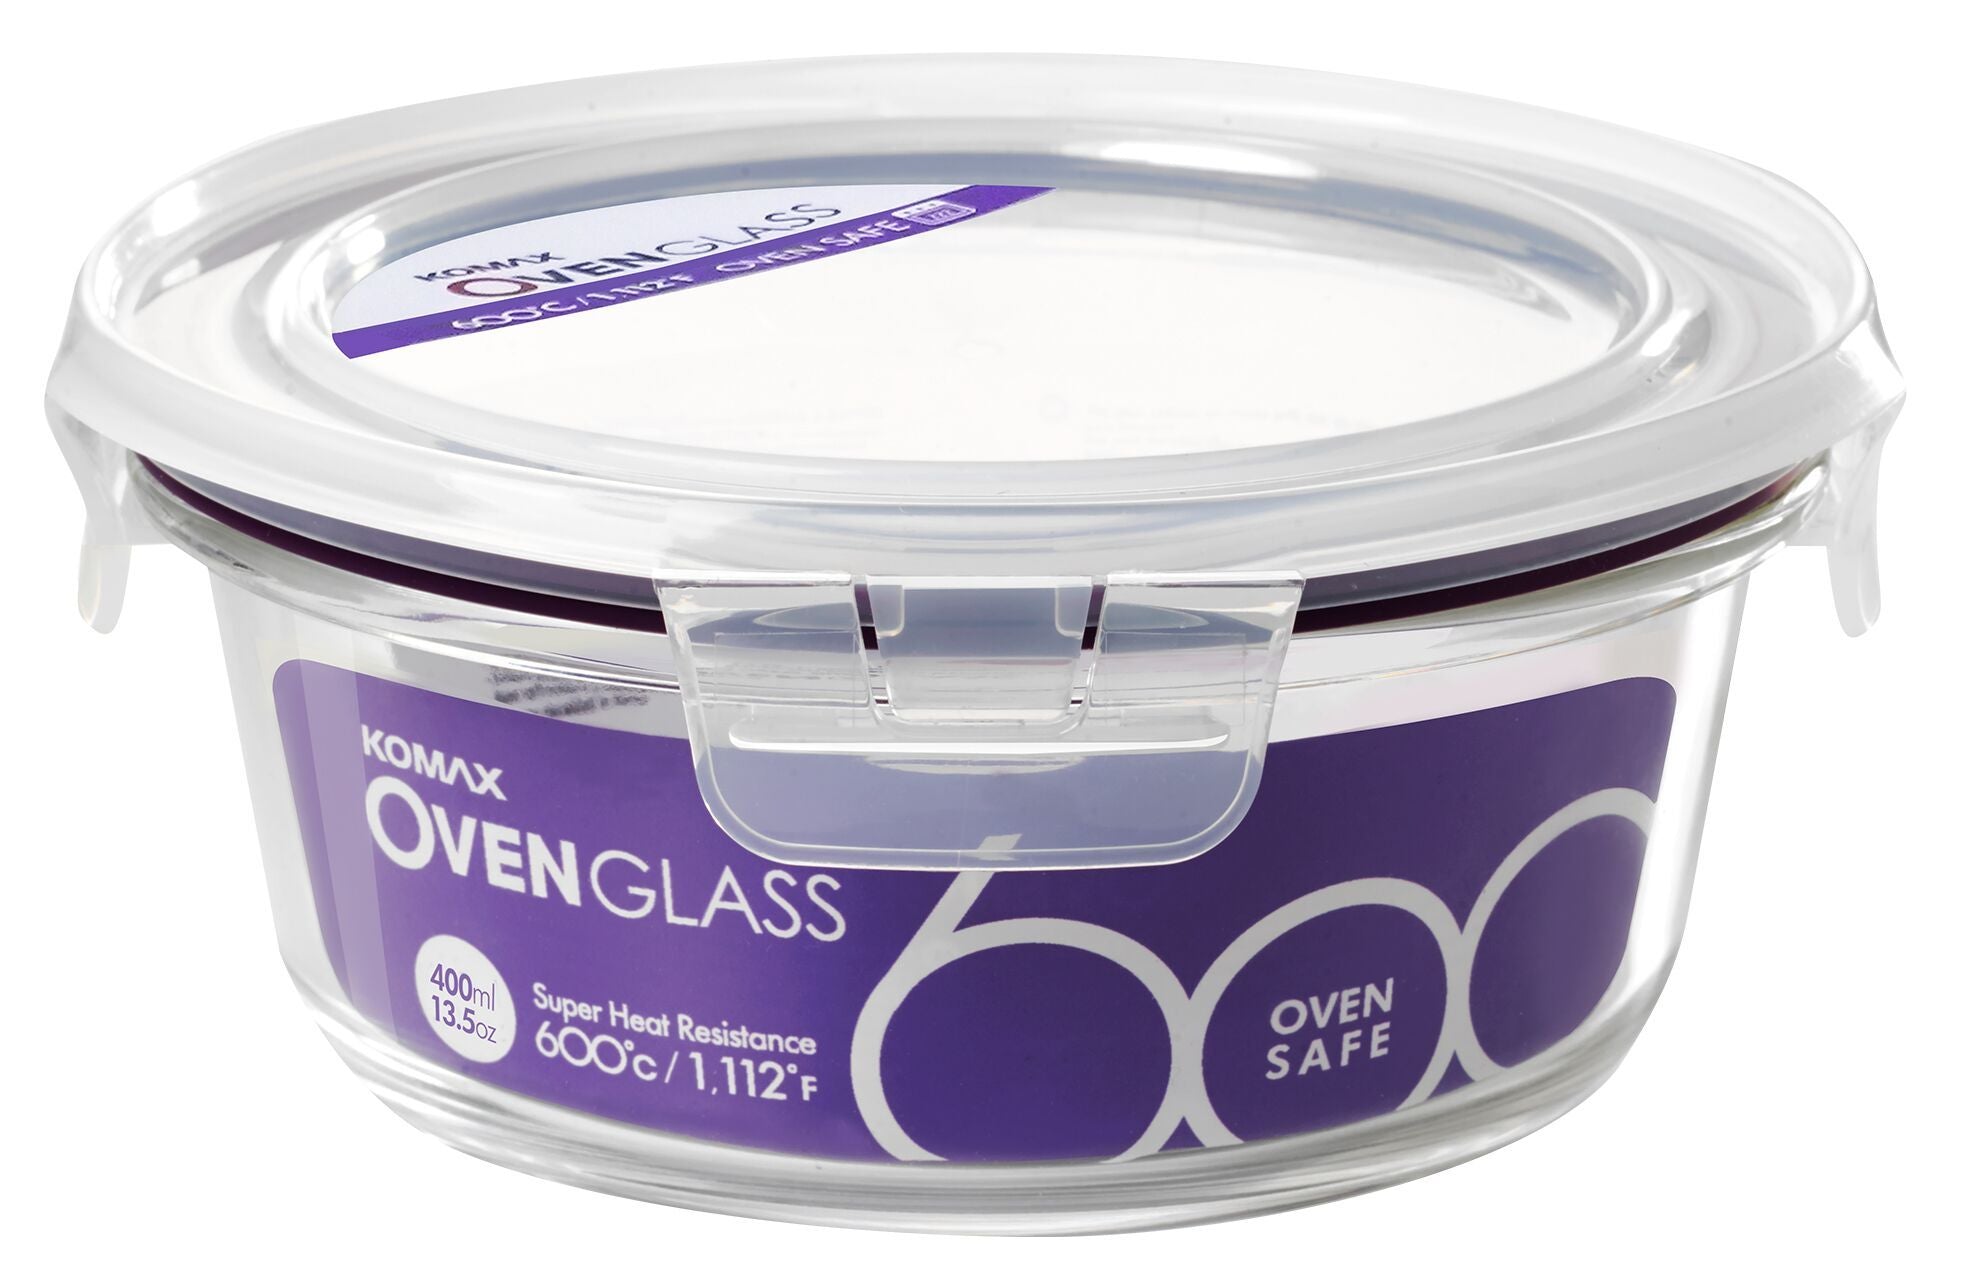 Komax Oven Glass Round Food Storage Container, 400 ml